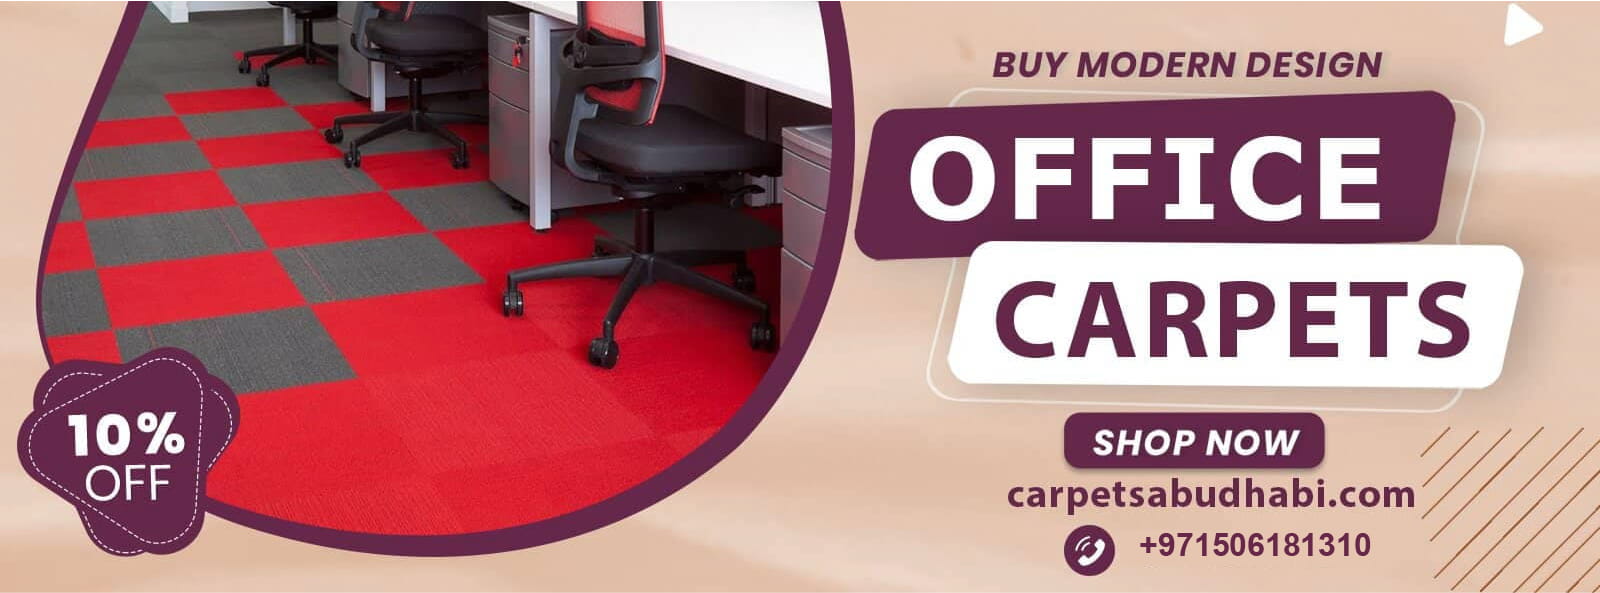 office carpets